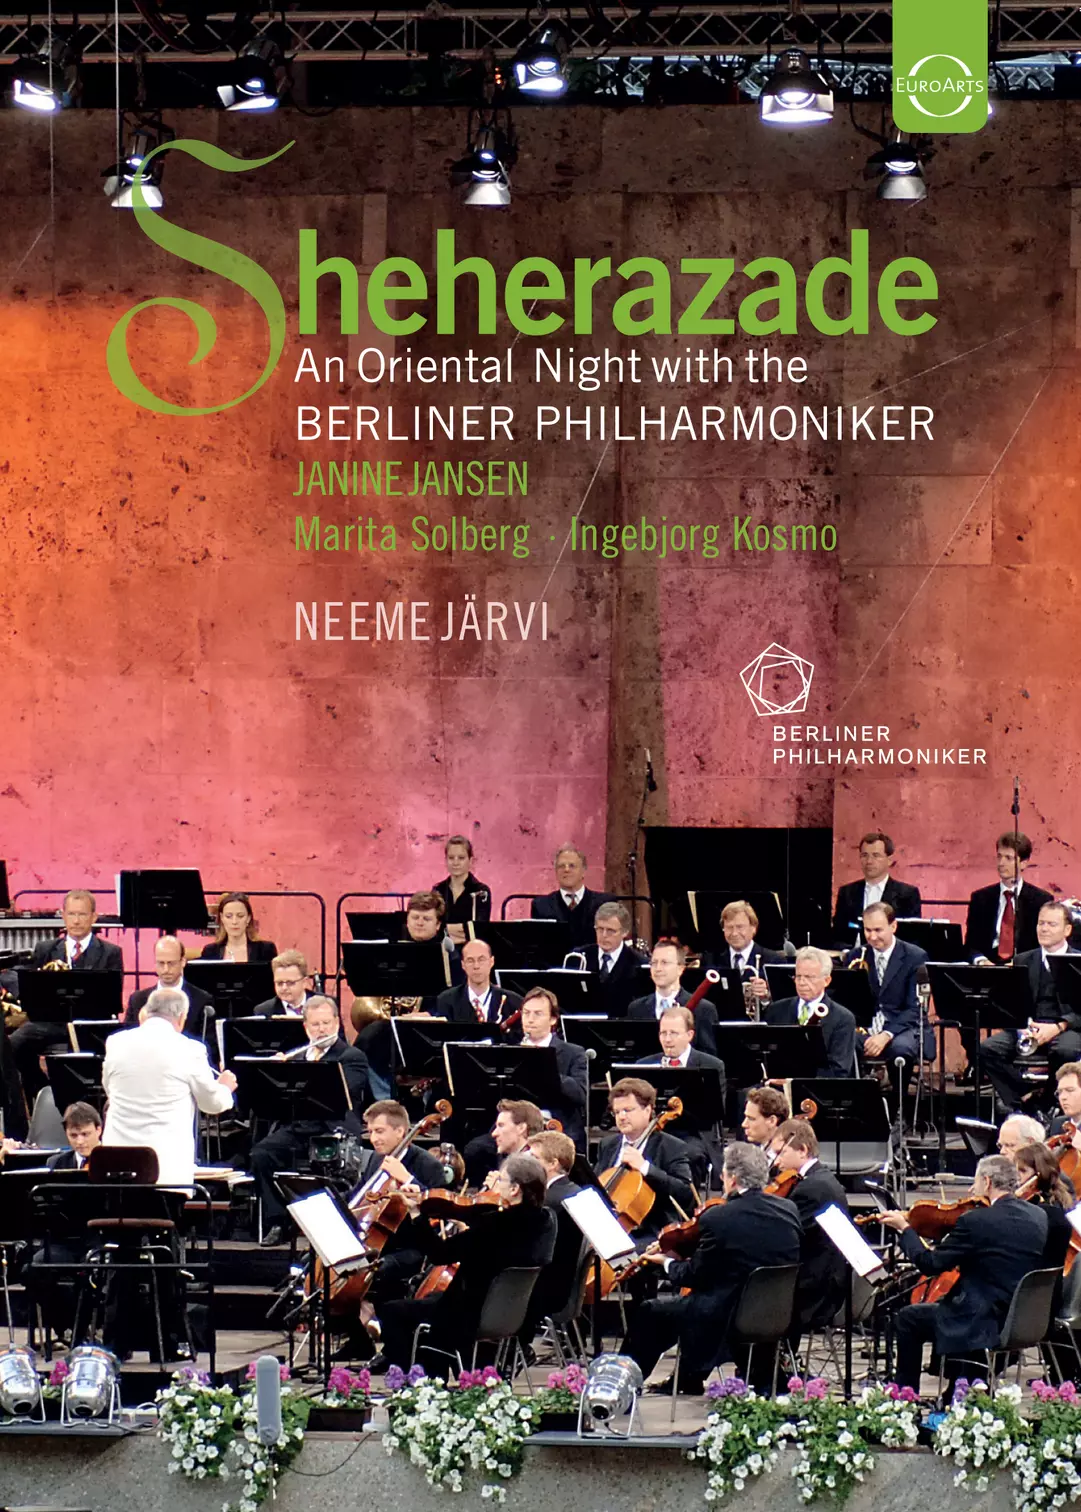 Sheherazade - An Oriental Night with the Berliner Philharmoniker